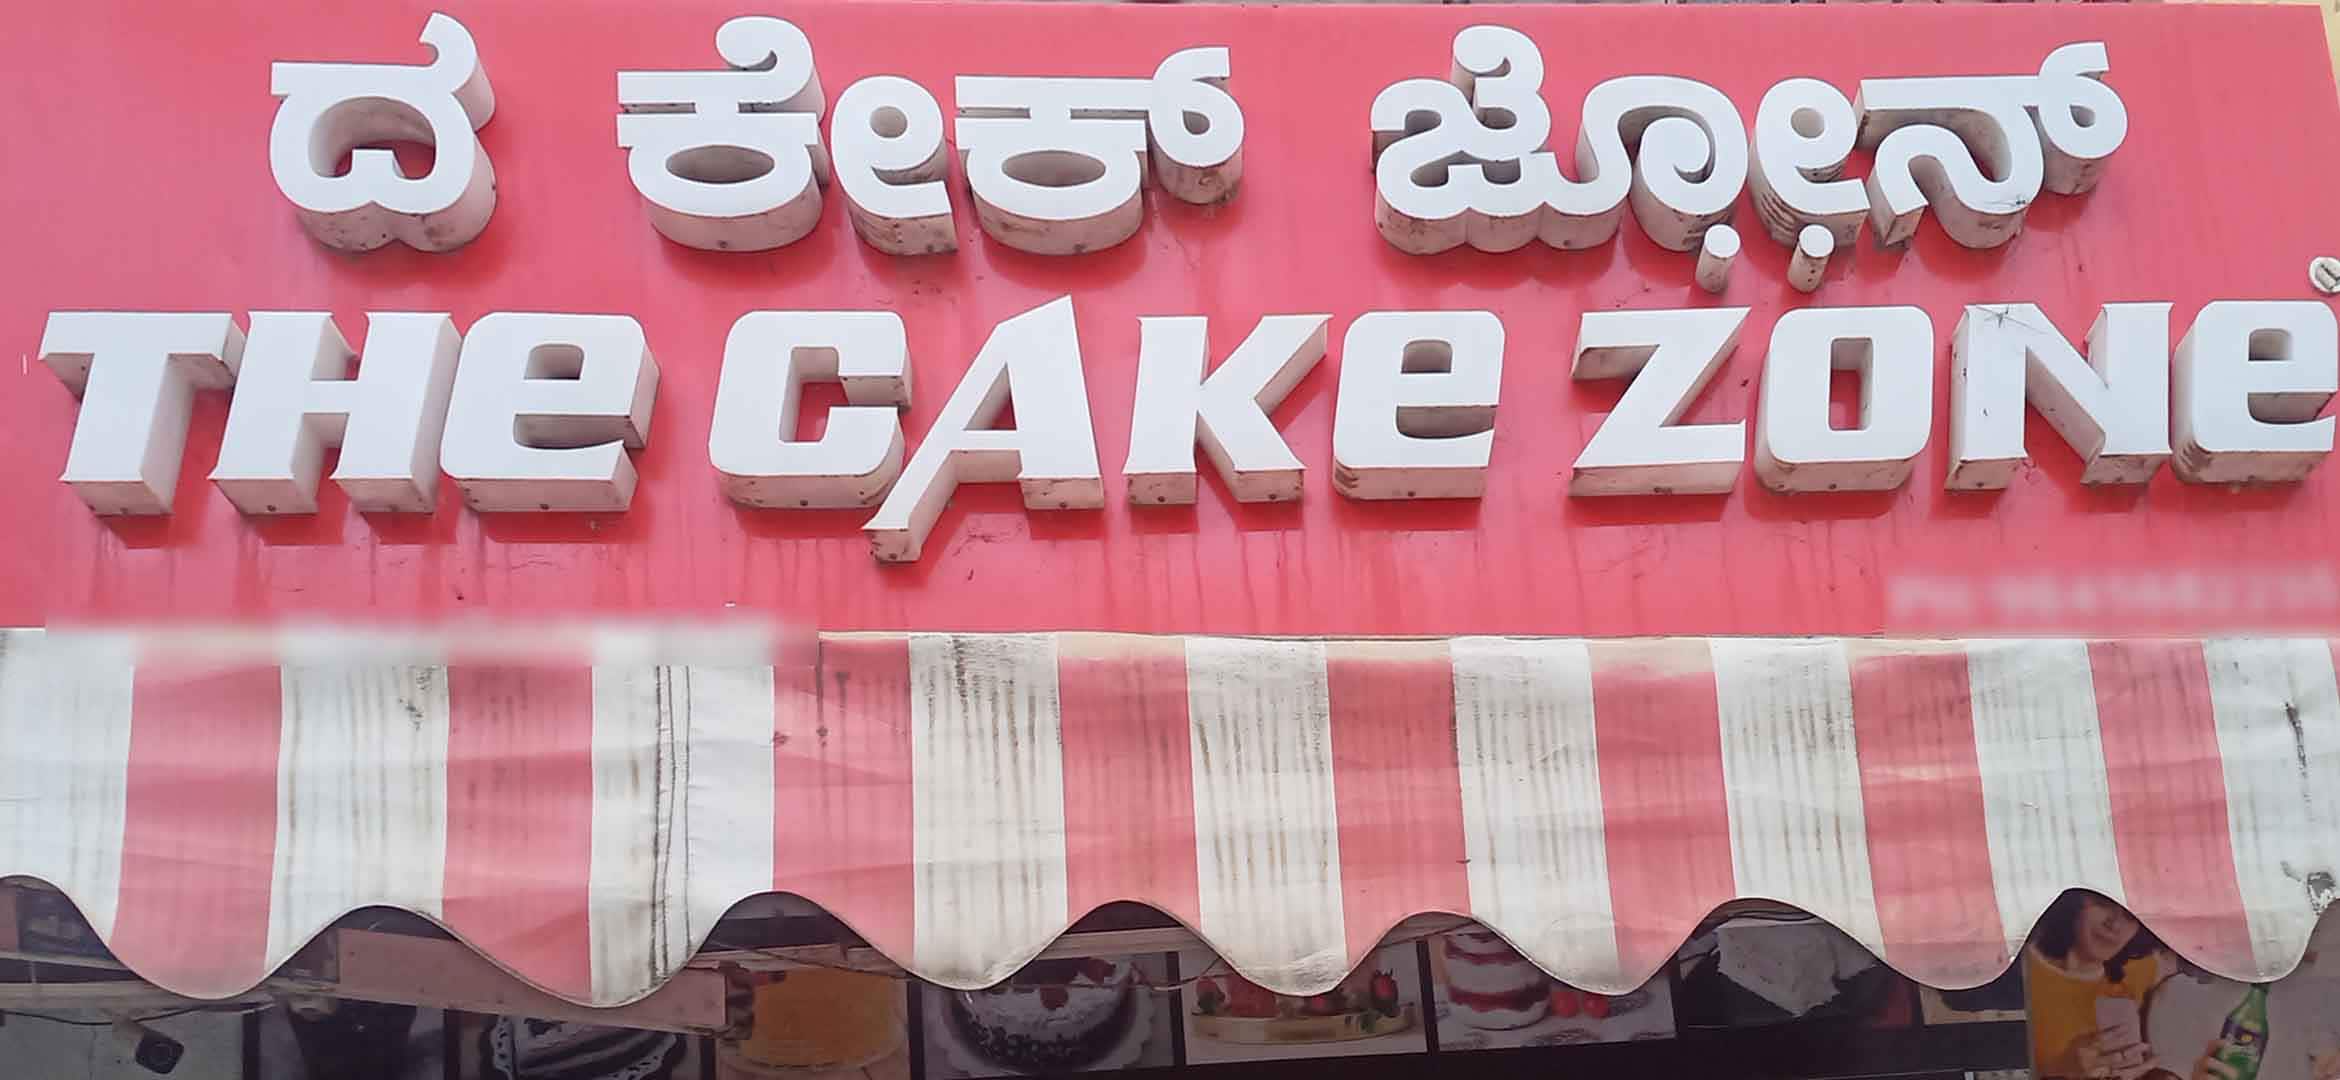 Cakezone in Mahadevapura,Bangalore - Best Cake Shops in Bangalore - Justdial